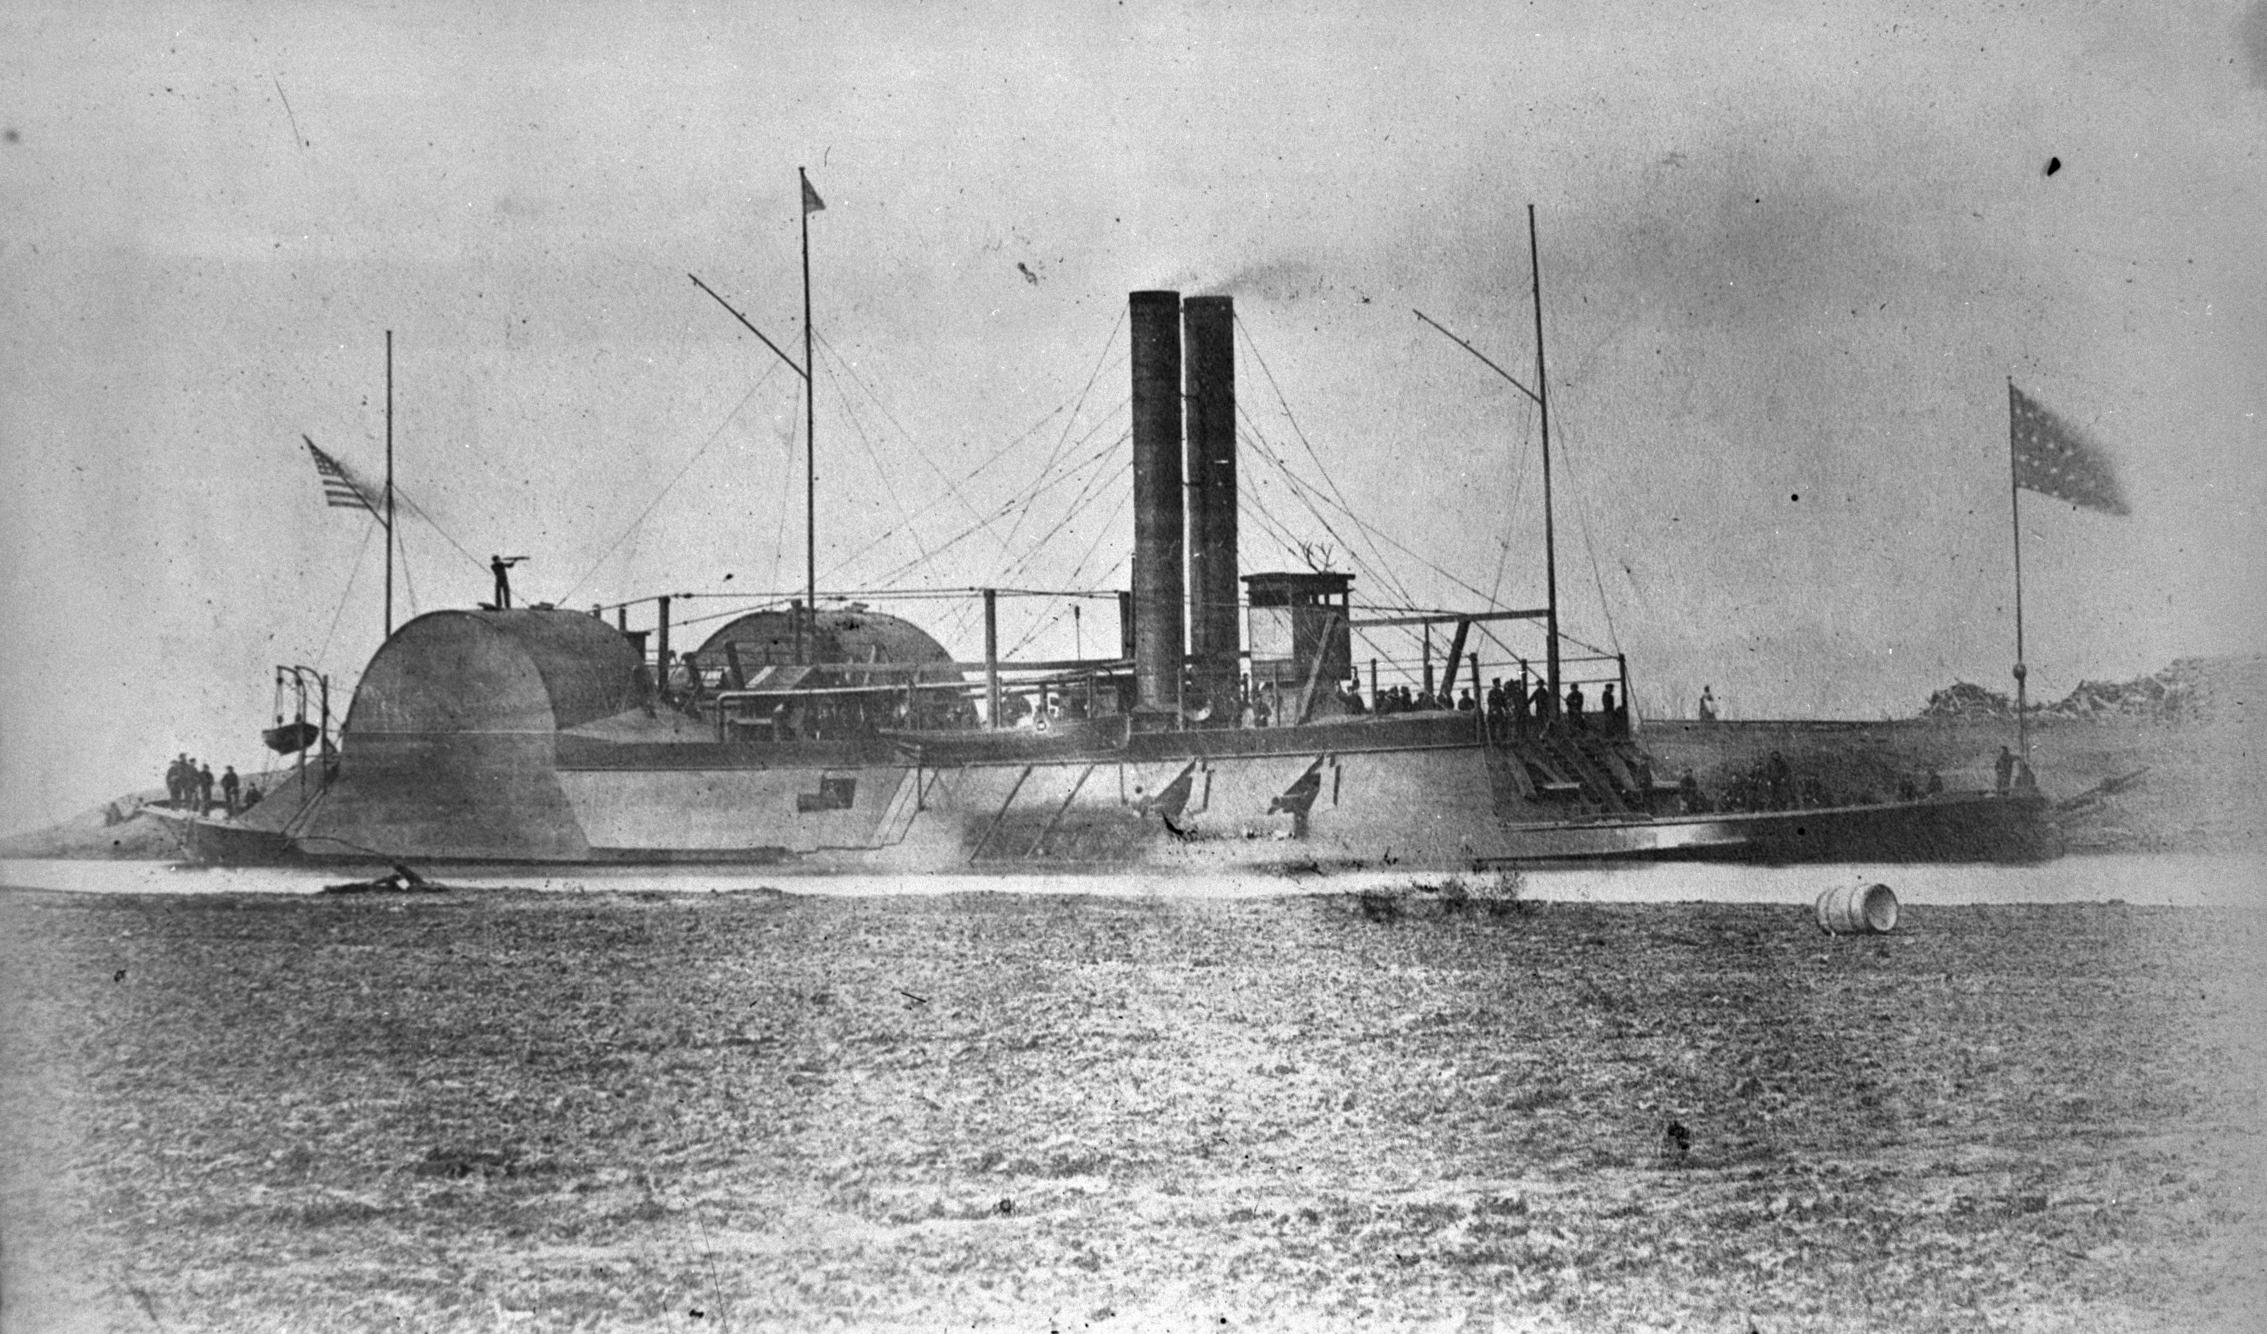 Eastport (Packet/Gunboat, 1852-1864)